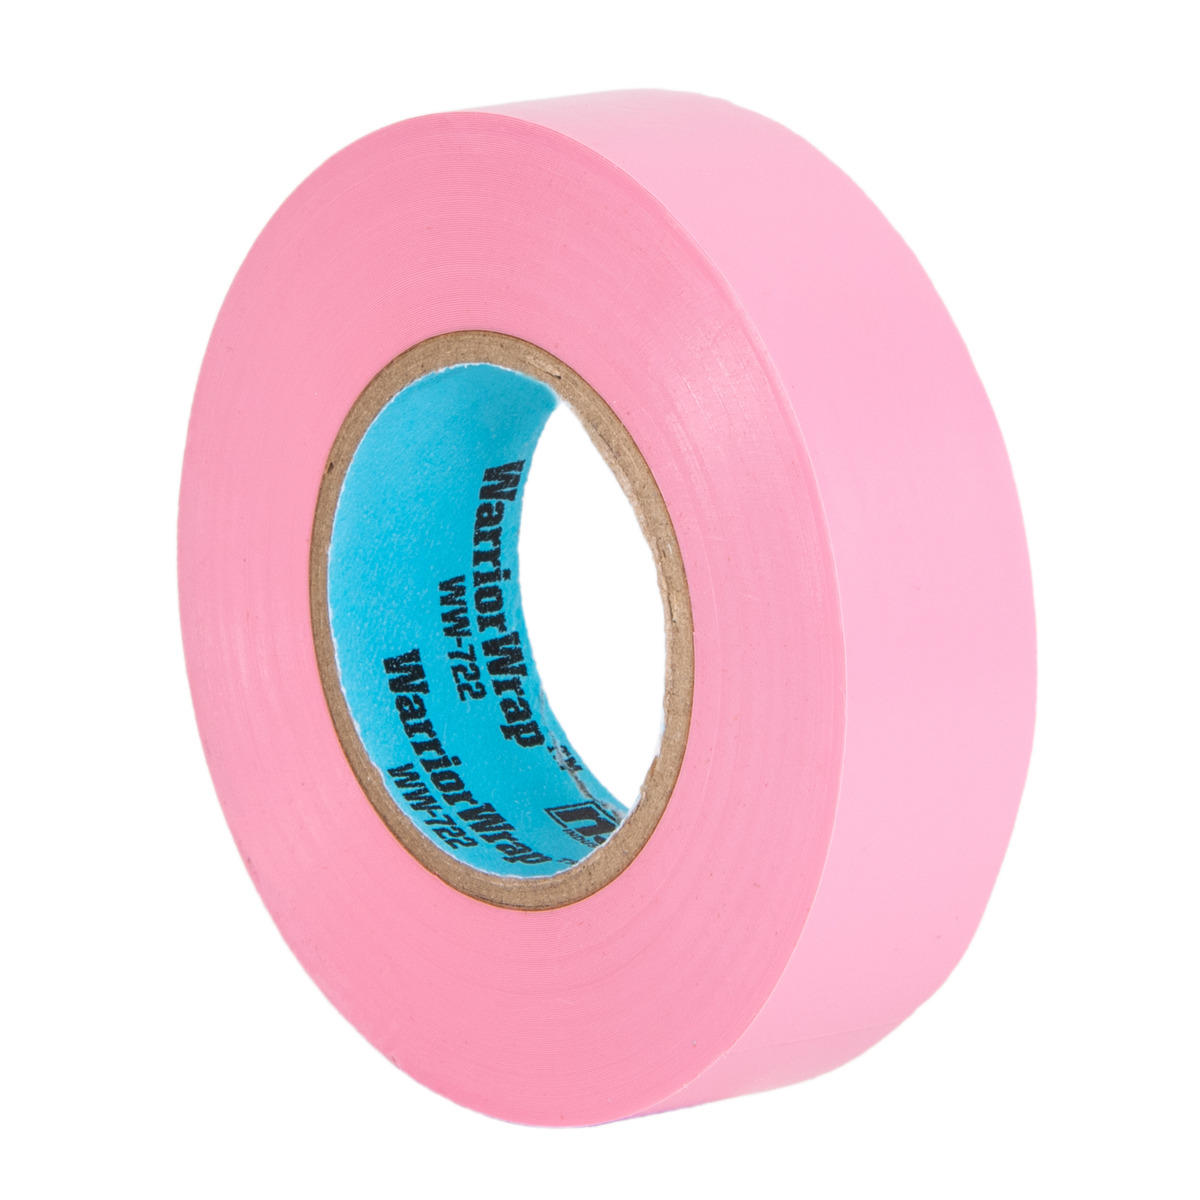 Professional Pink Vinyl Electrical Tape, 7mil, 60ft Long - NSI